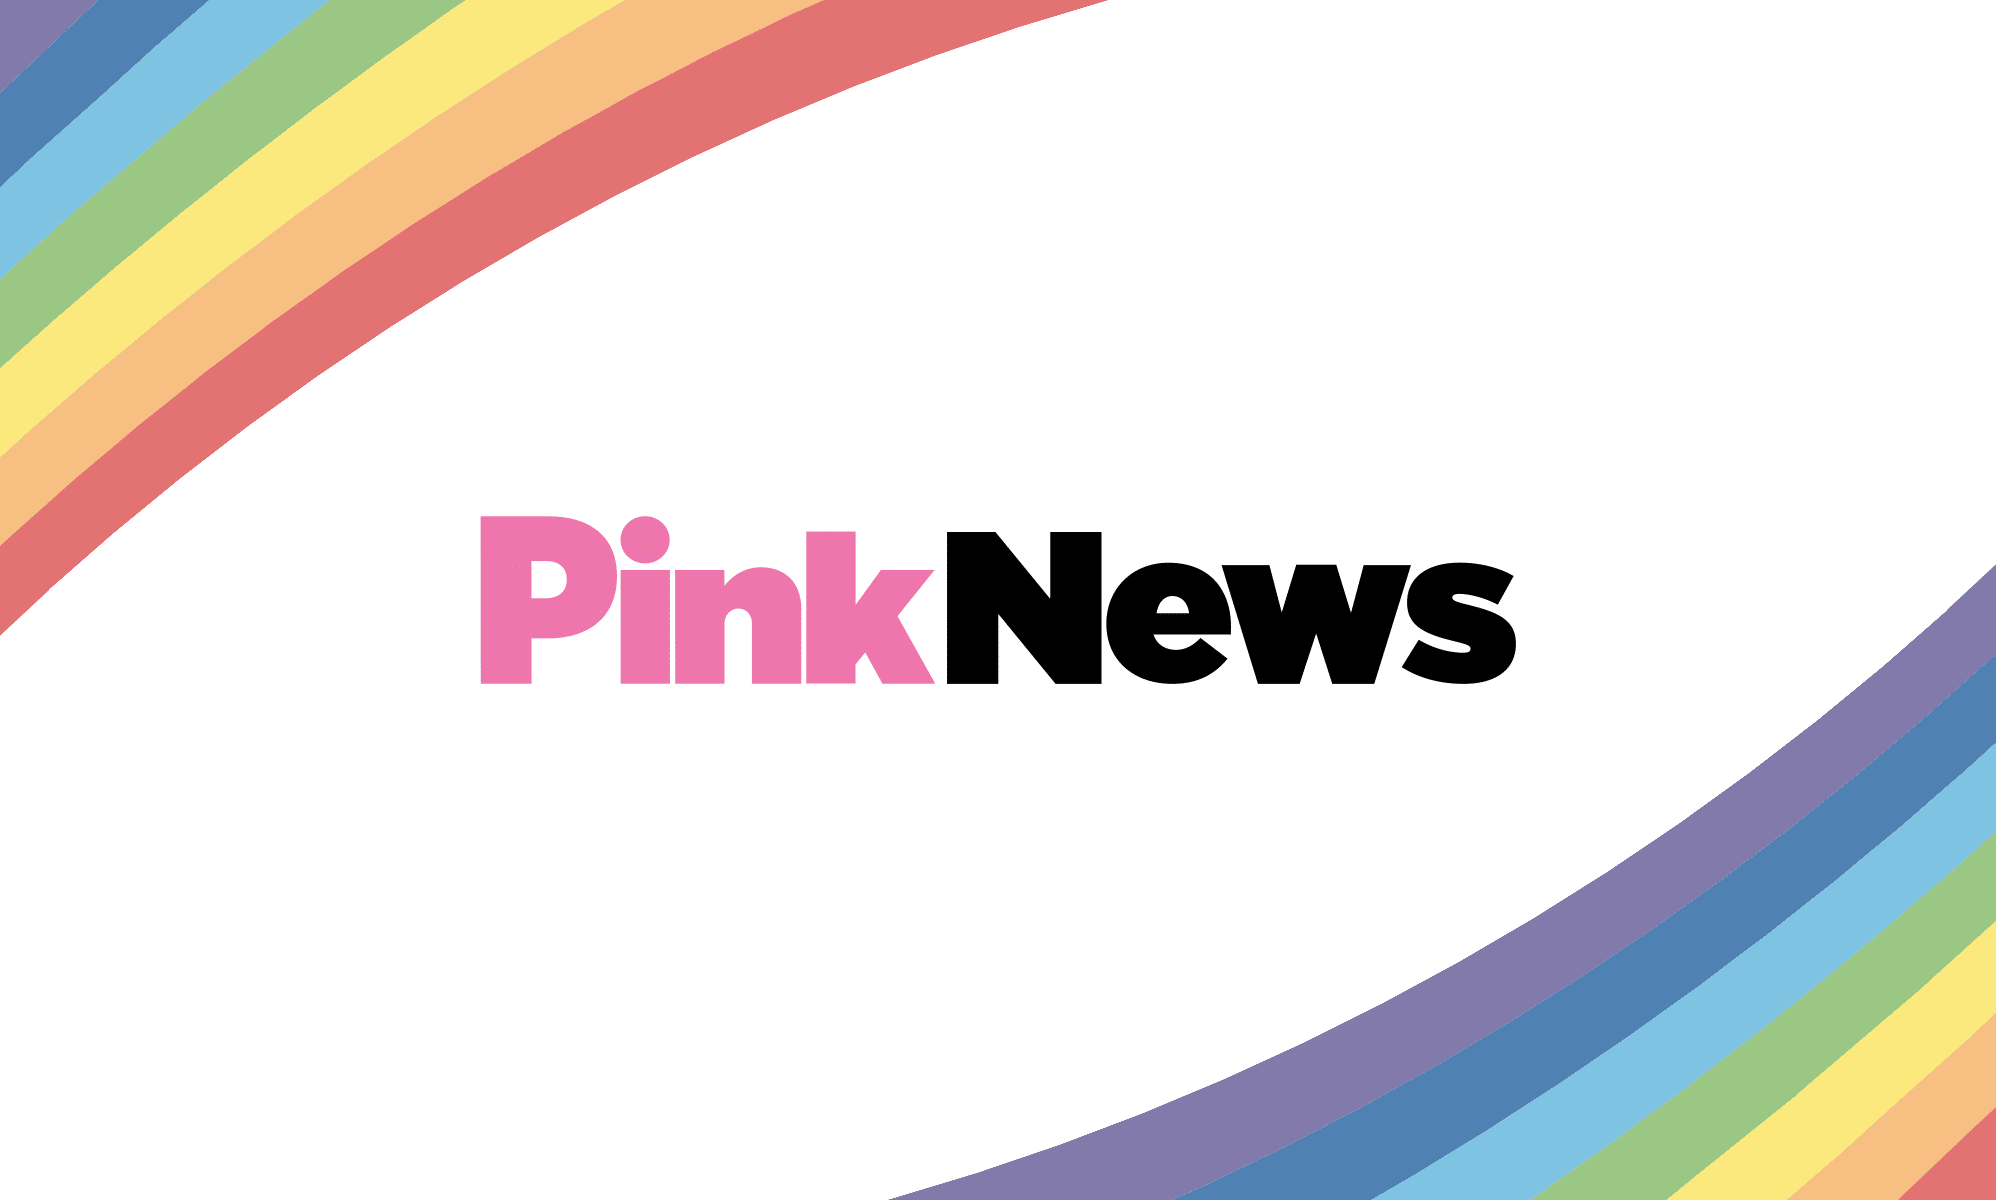 Mexico president Enrique Pena Nieto vows to legalise same-sex marriage